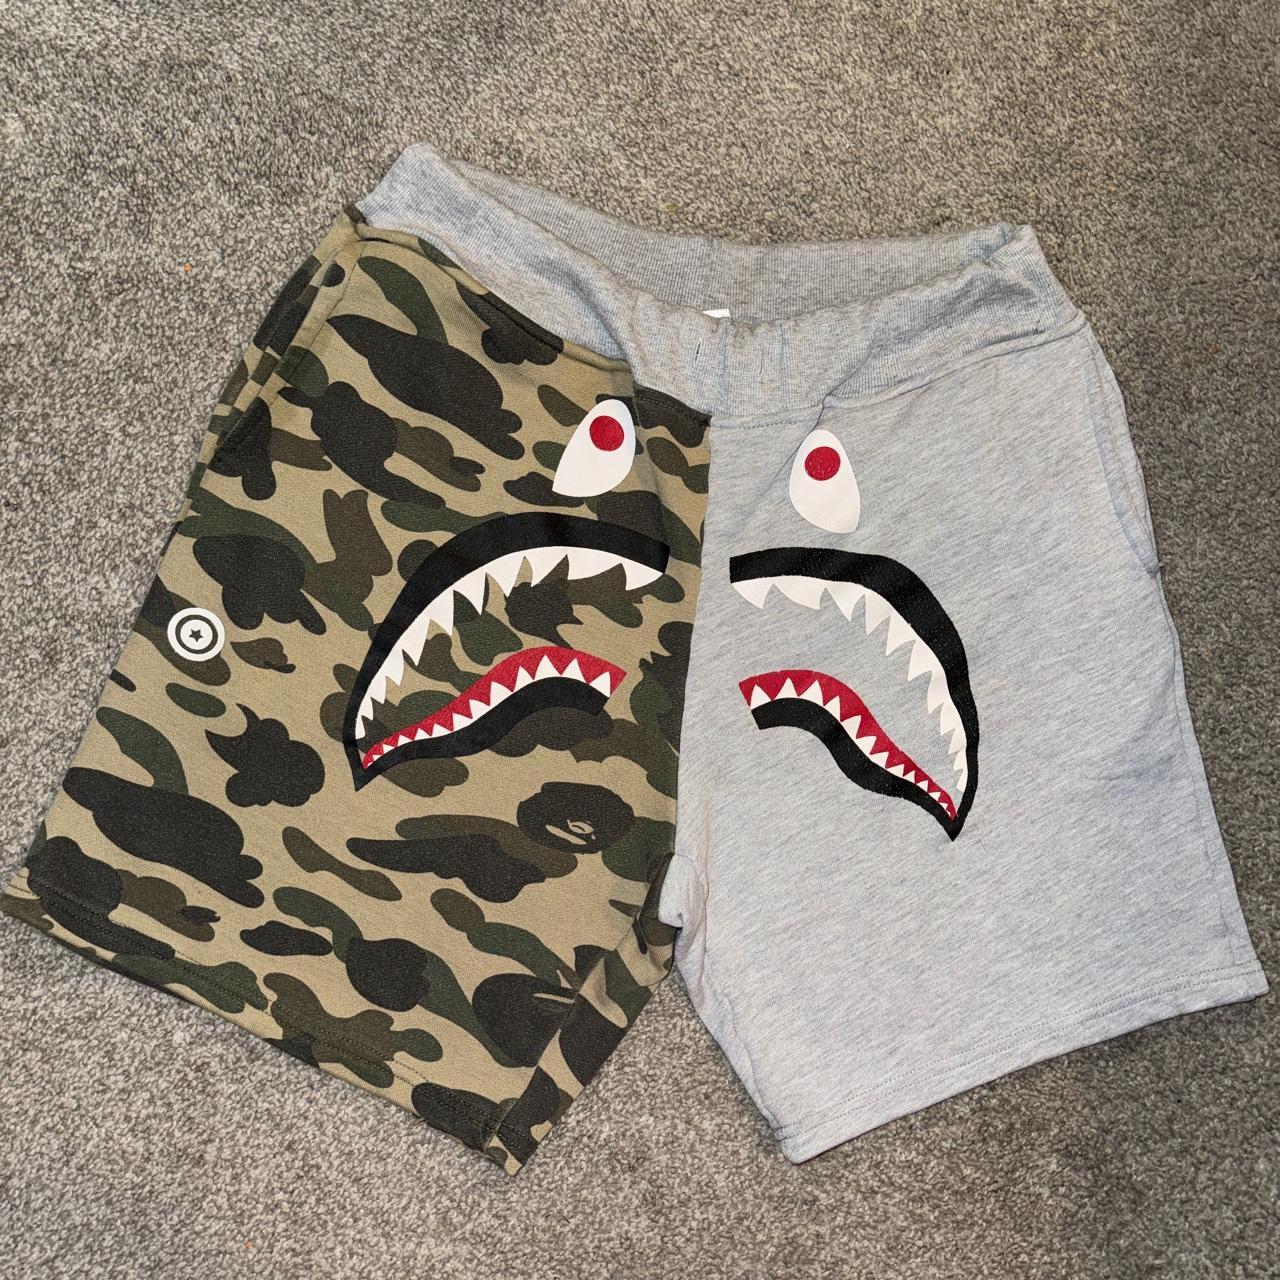 Authentic Camo/Shark Bape Shorts Size M Priced... - Depop